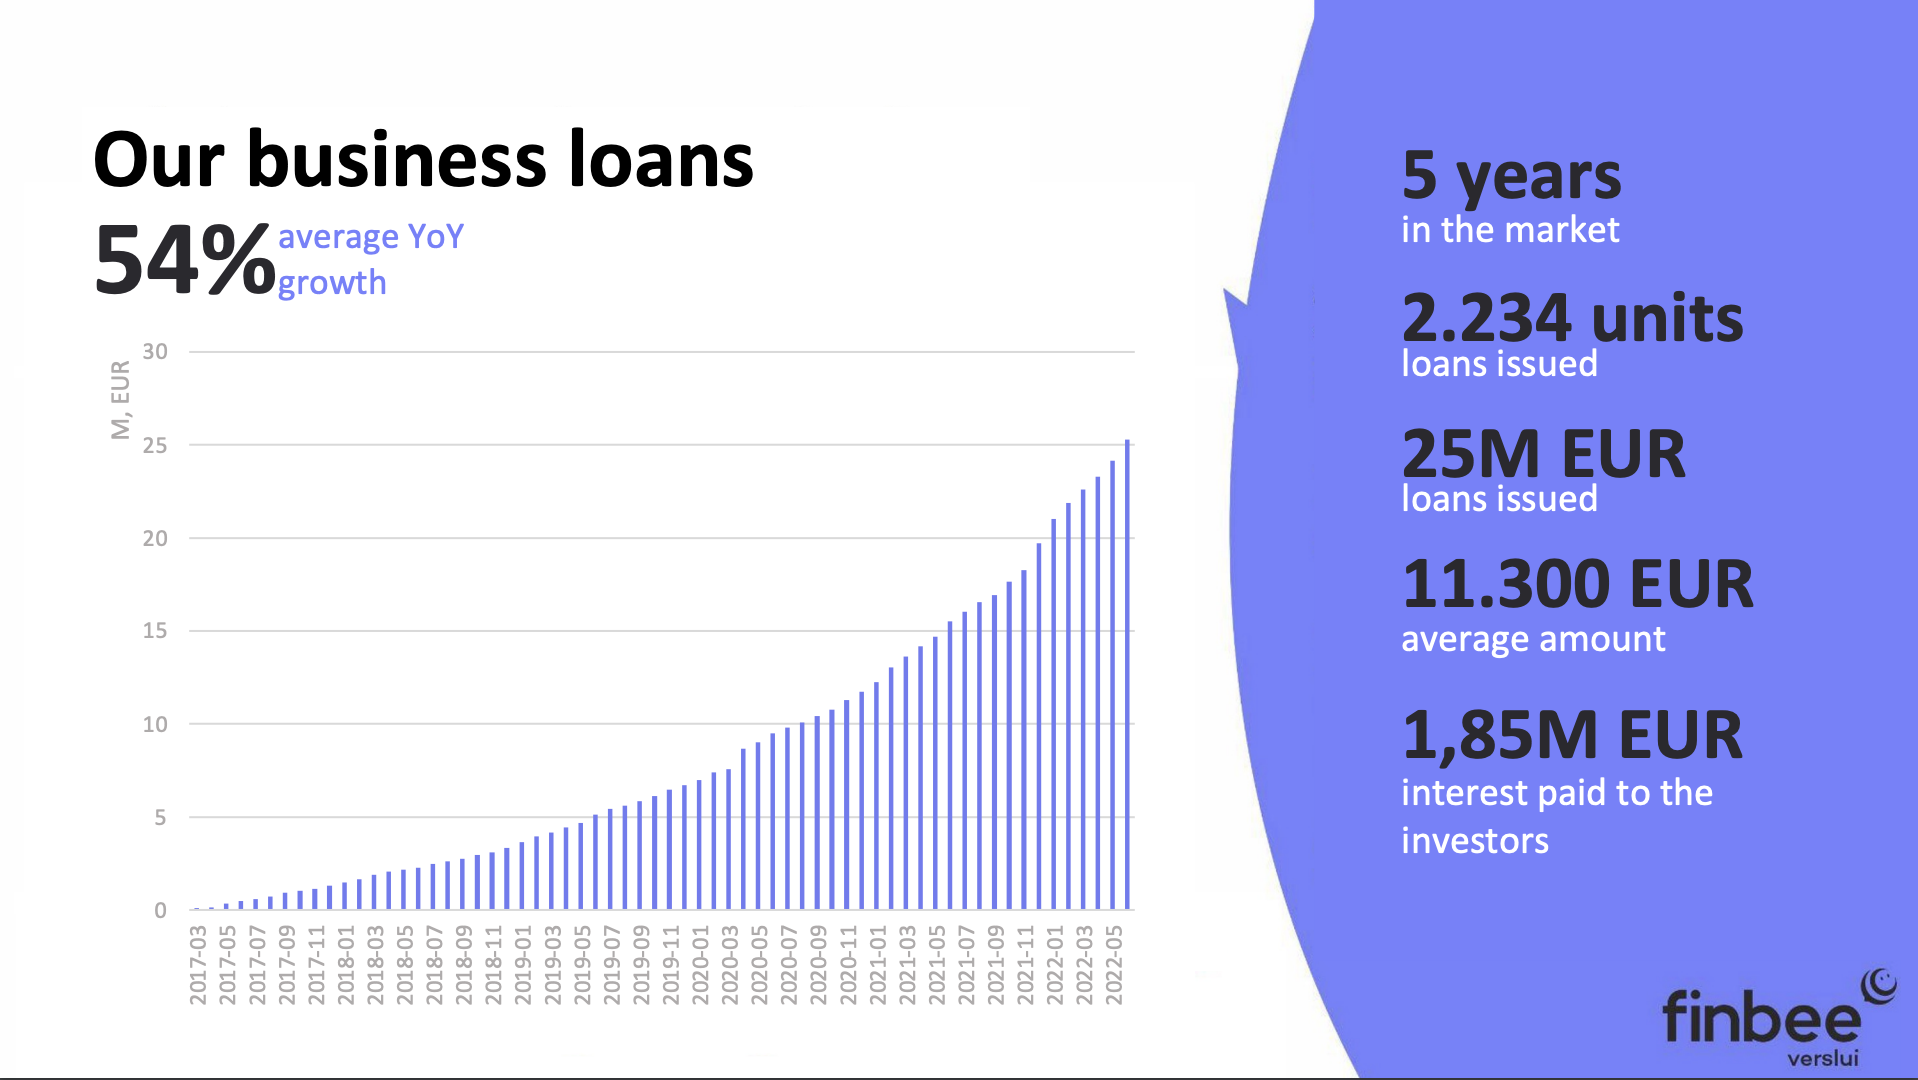 Finbee business loans portfolio performance